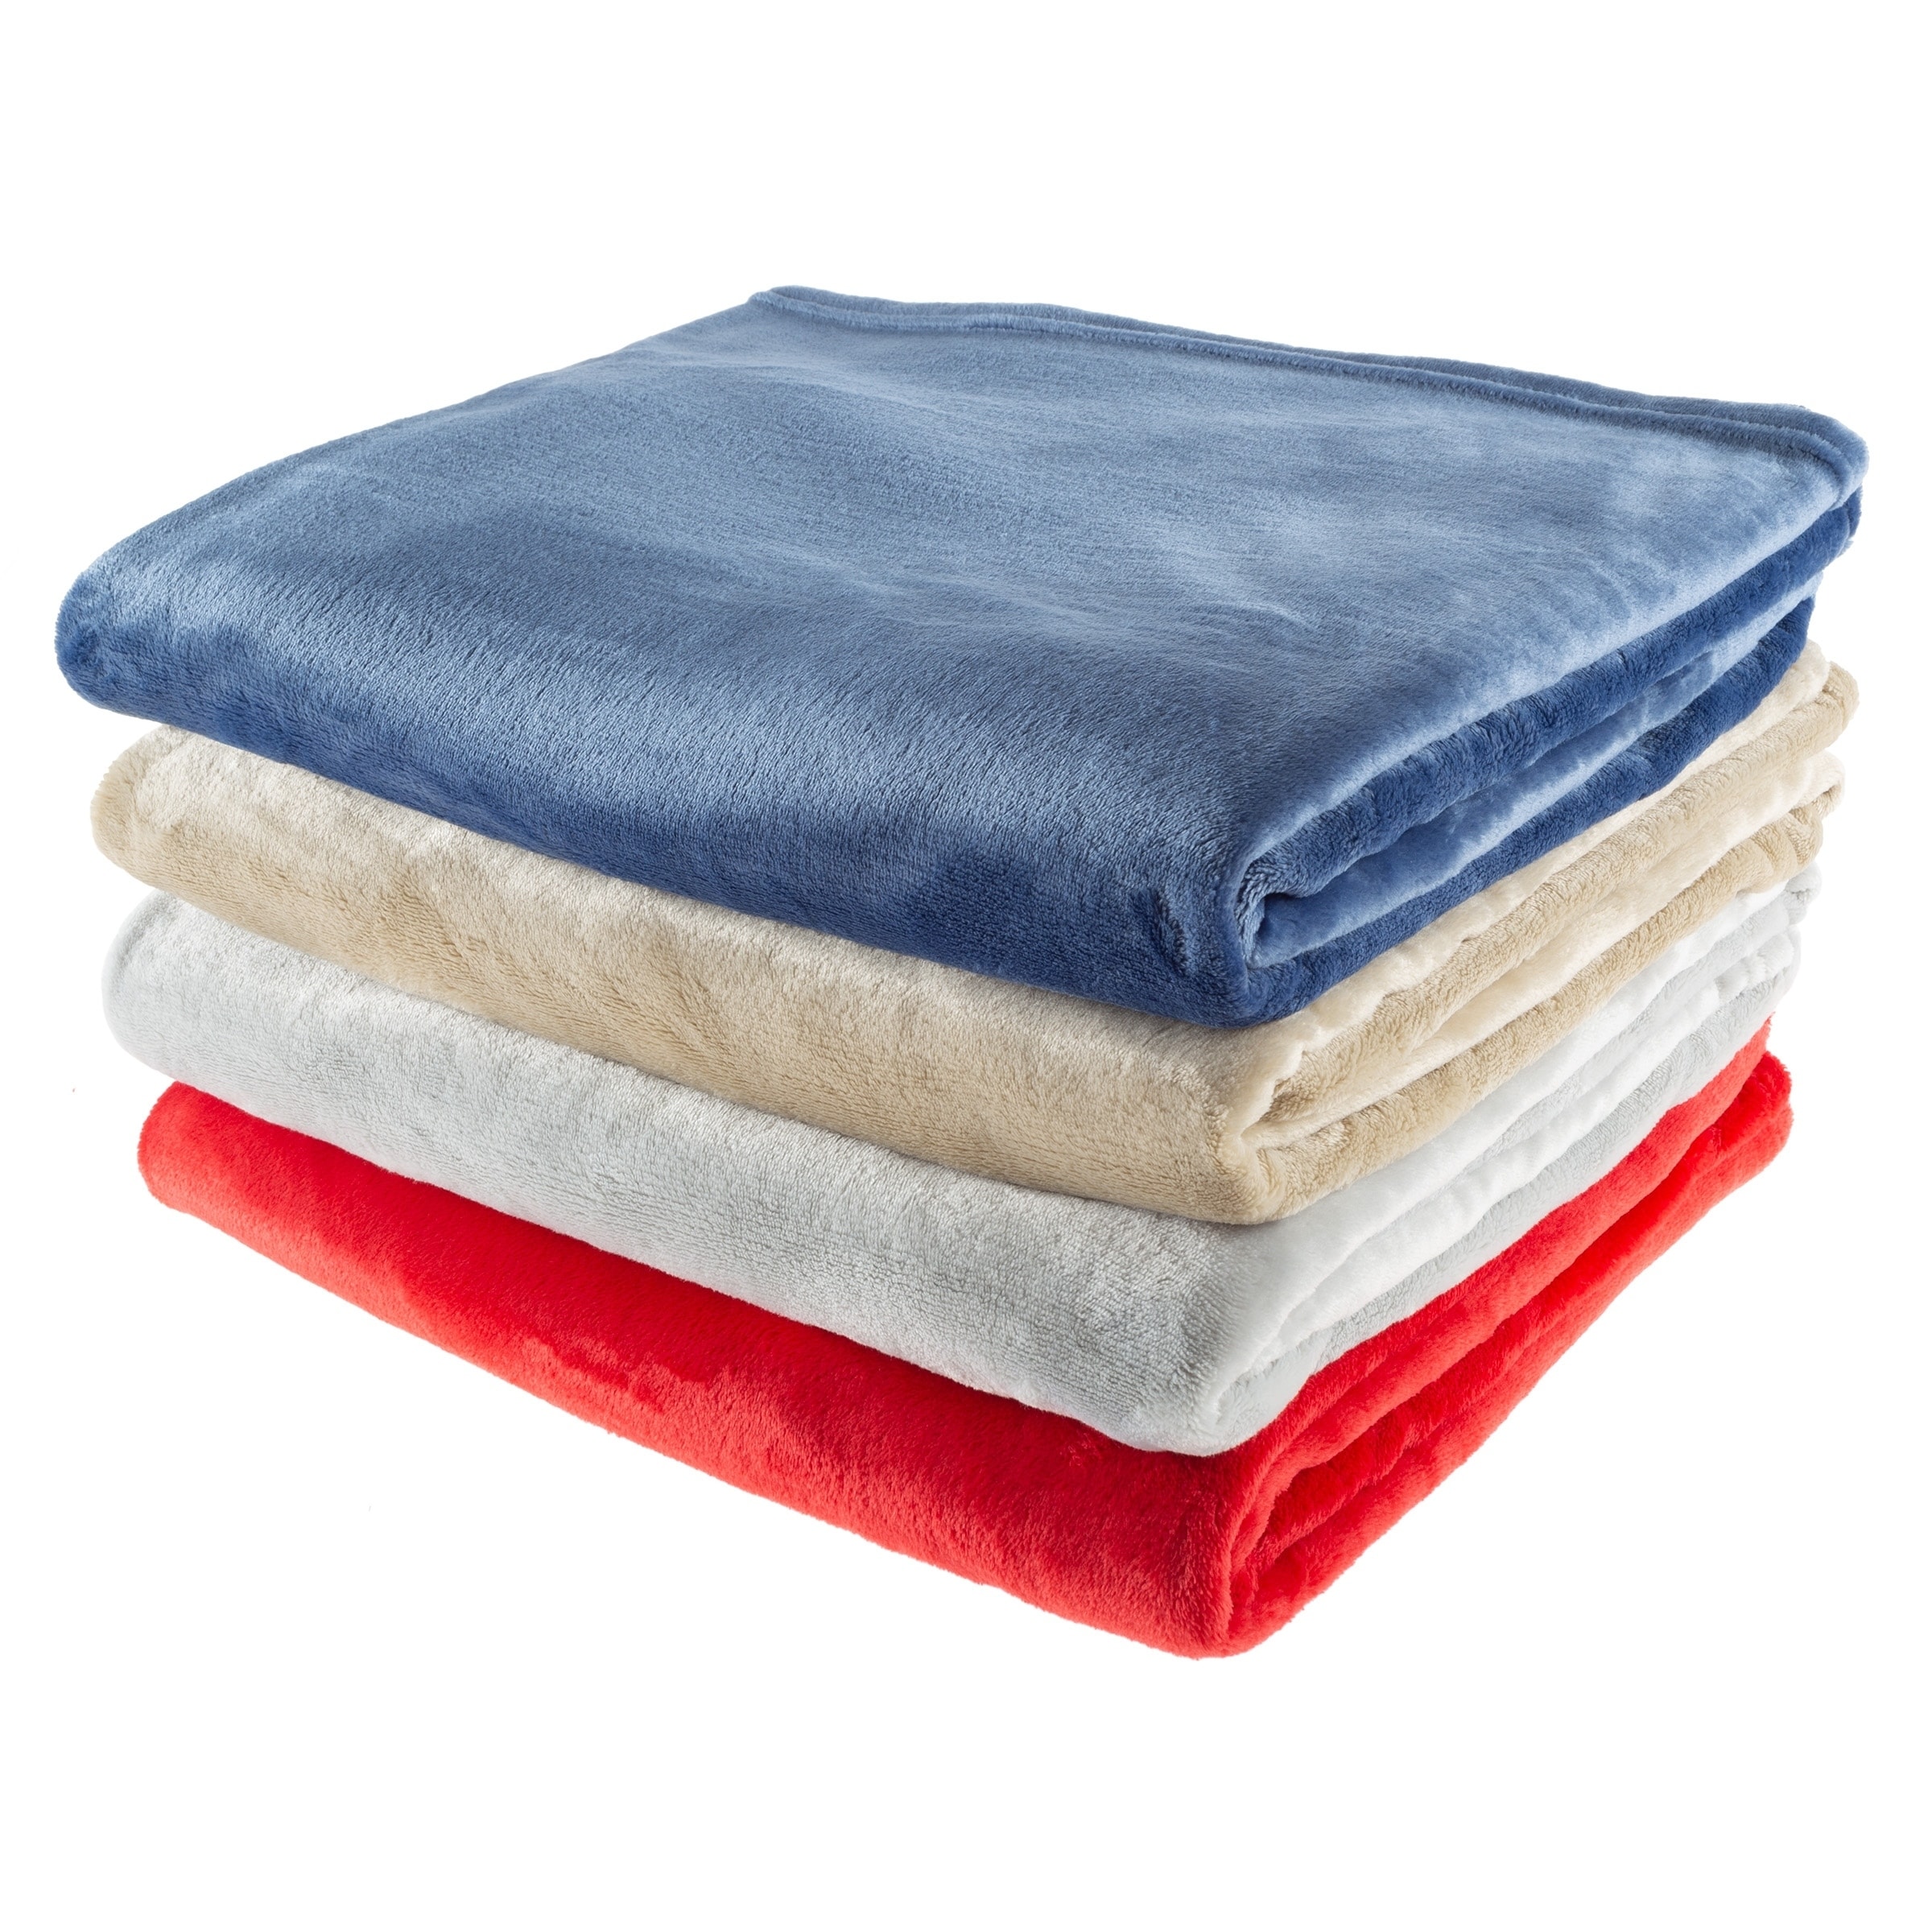 Flannel Fleece Blanket Throw By LHC On Sale Overstock 29802001